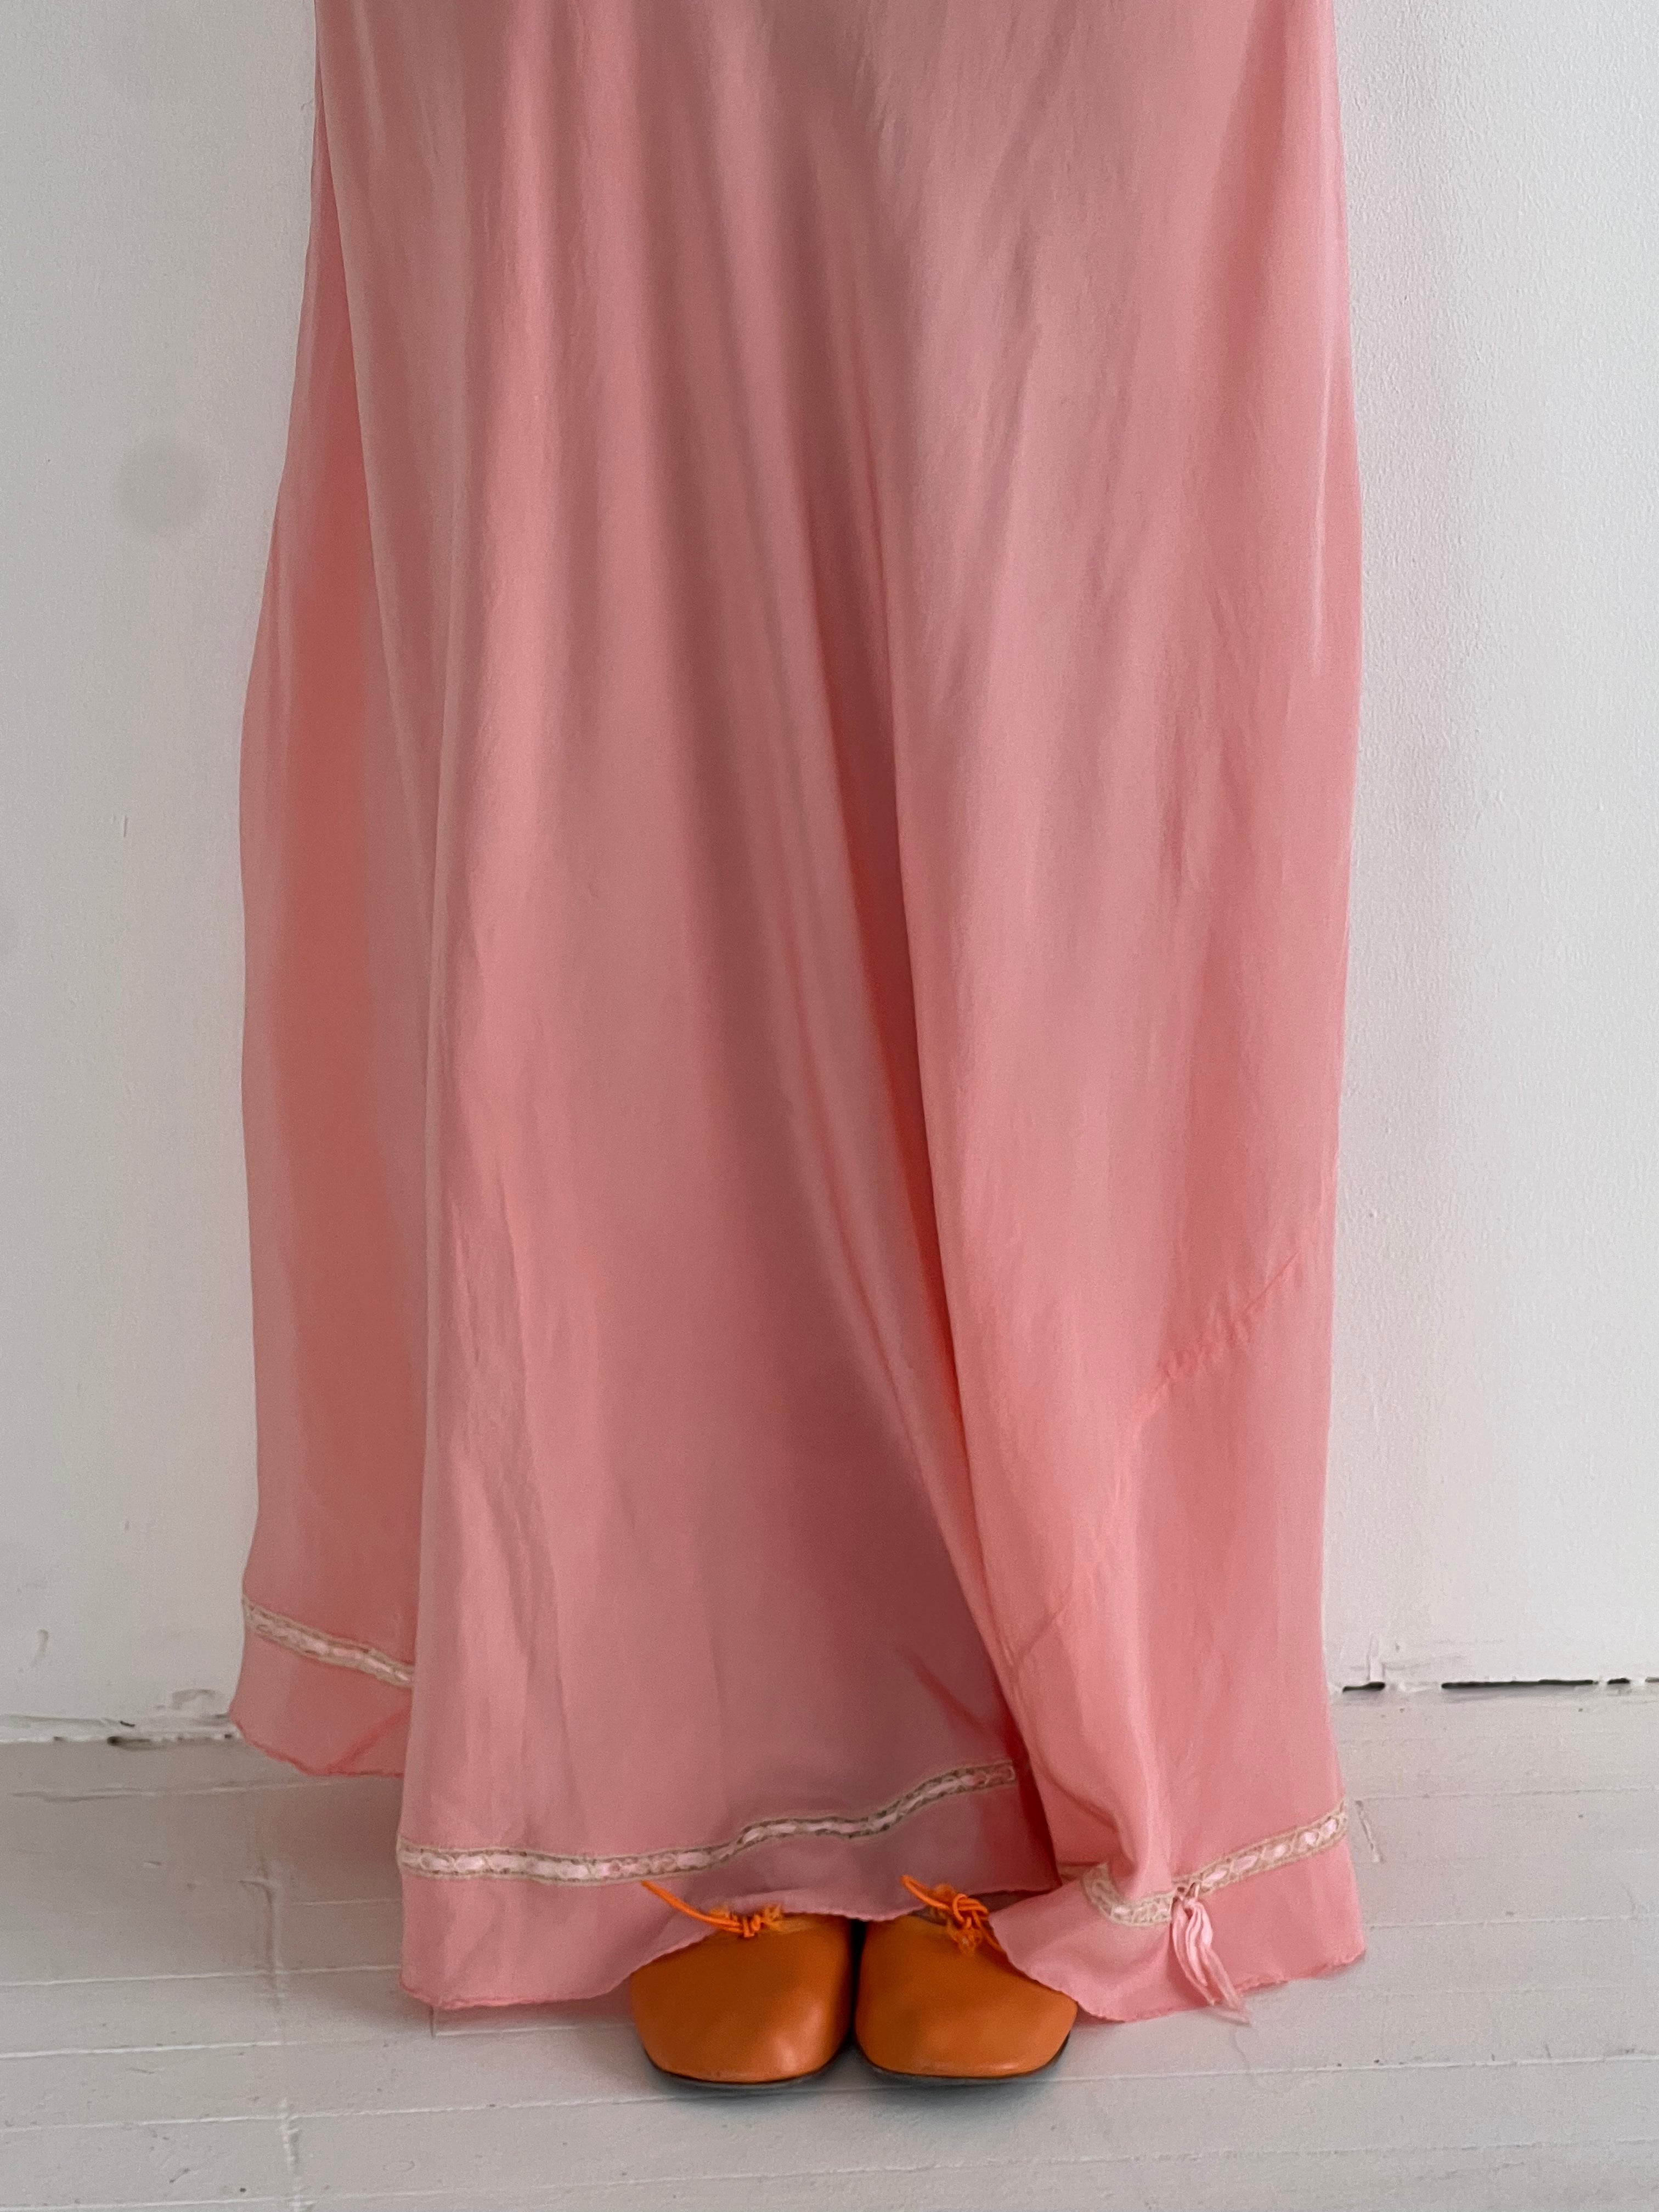 1930's Pink Silk Slip Dress with Ruffle